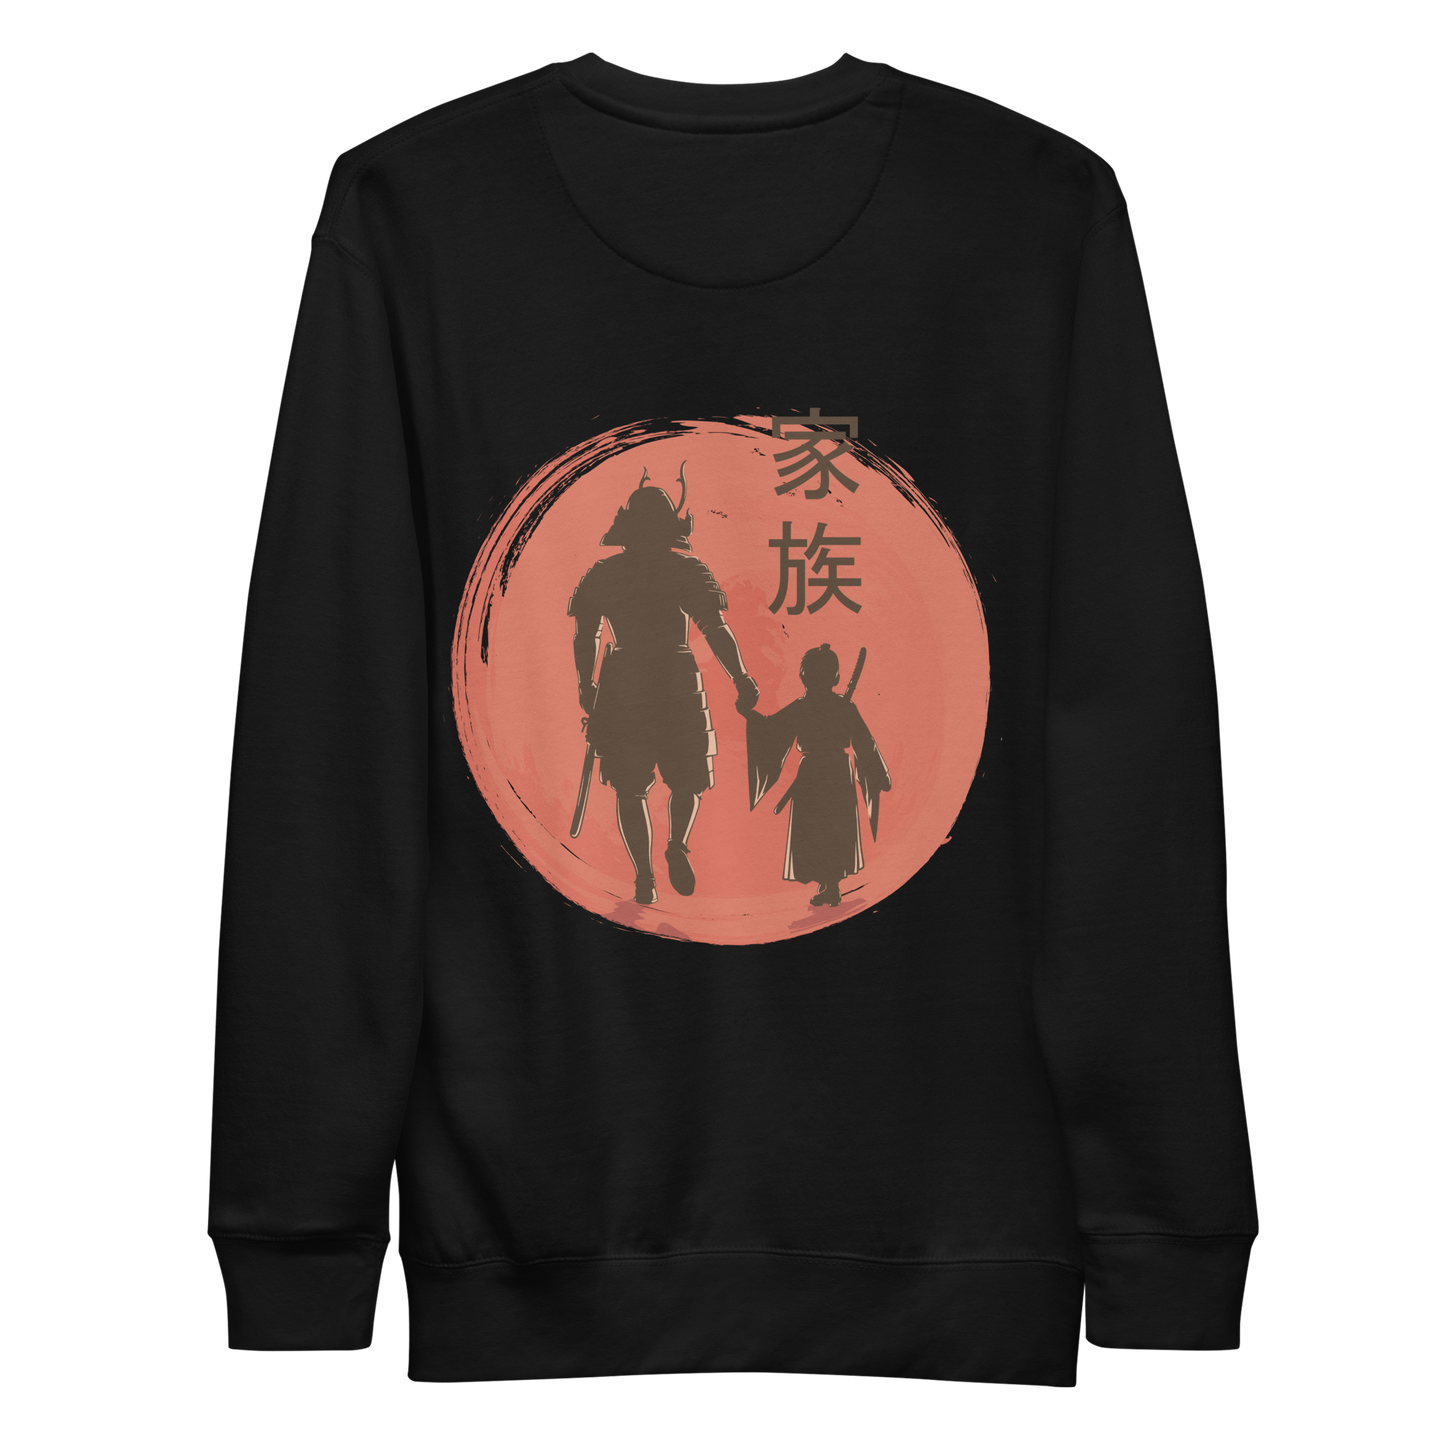 Samurai father and son | Unisex Premium Sweatshirt - F&B